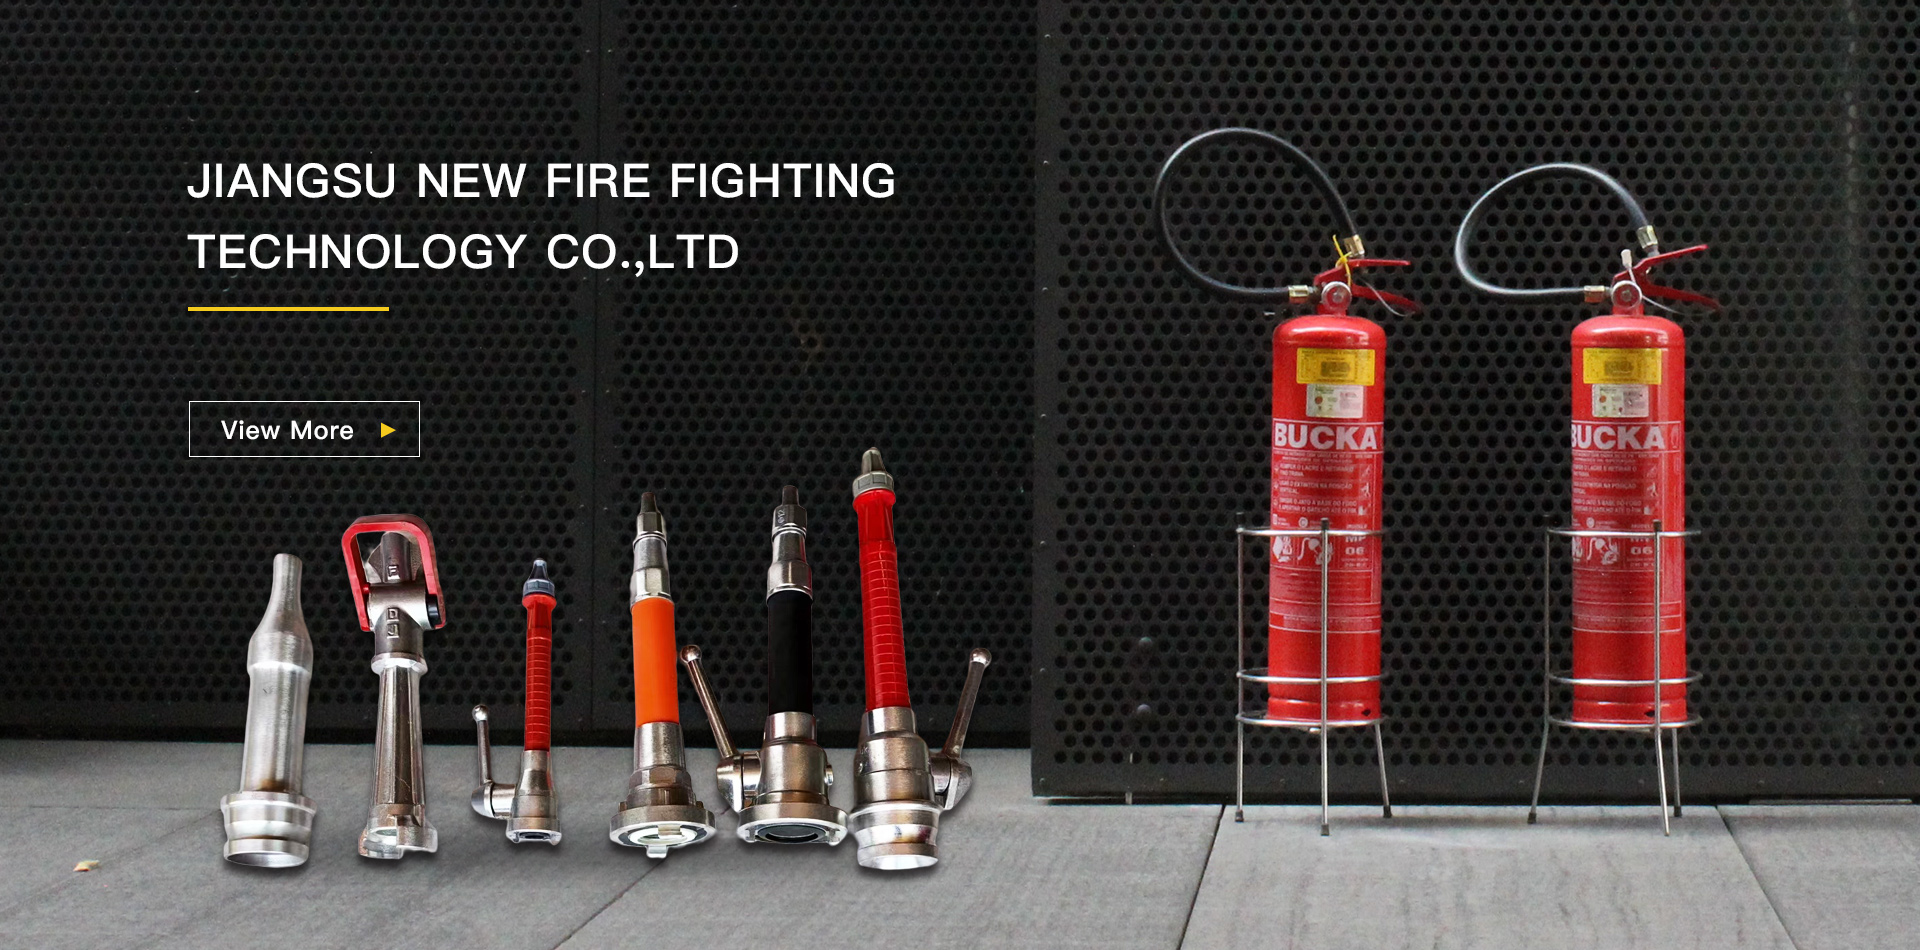 JIANGSU NEW FIRE FIGHTING TECHNOLOGY CO.,LTD